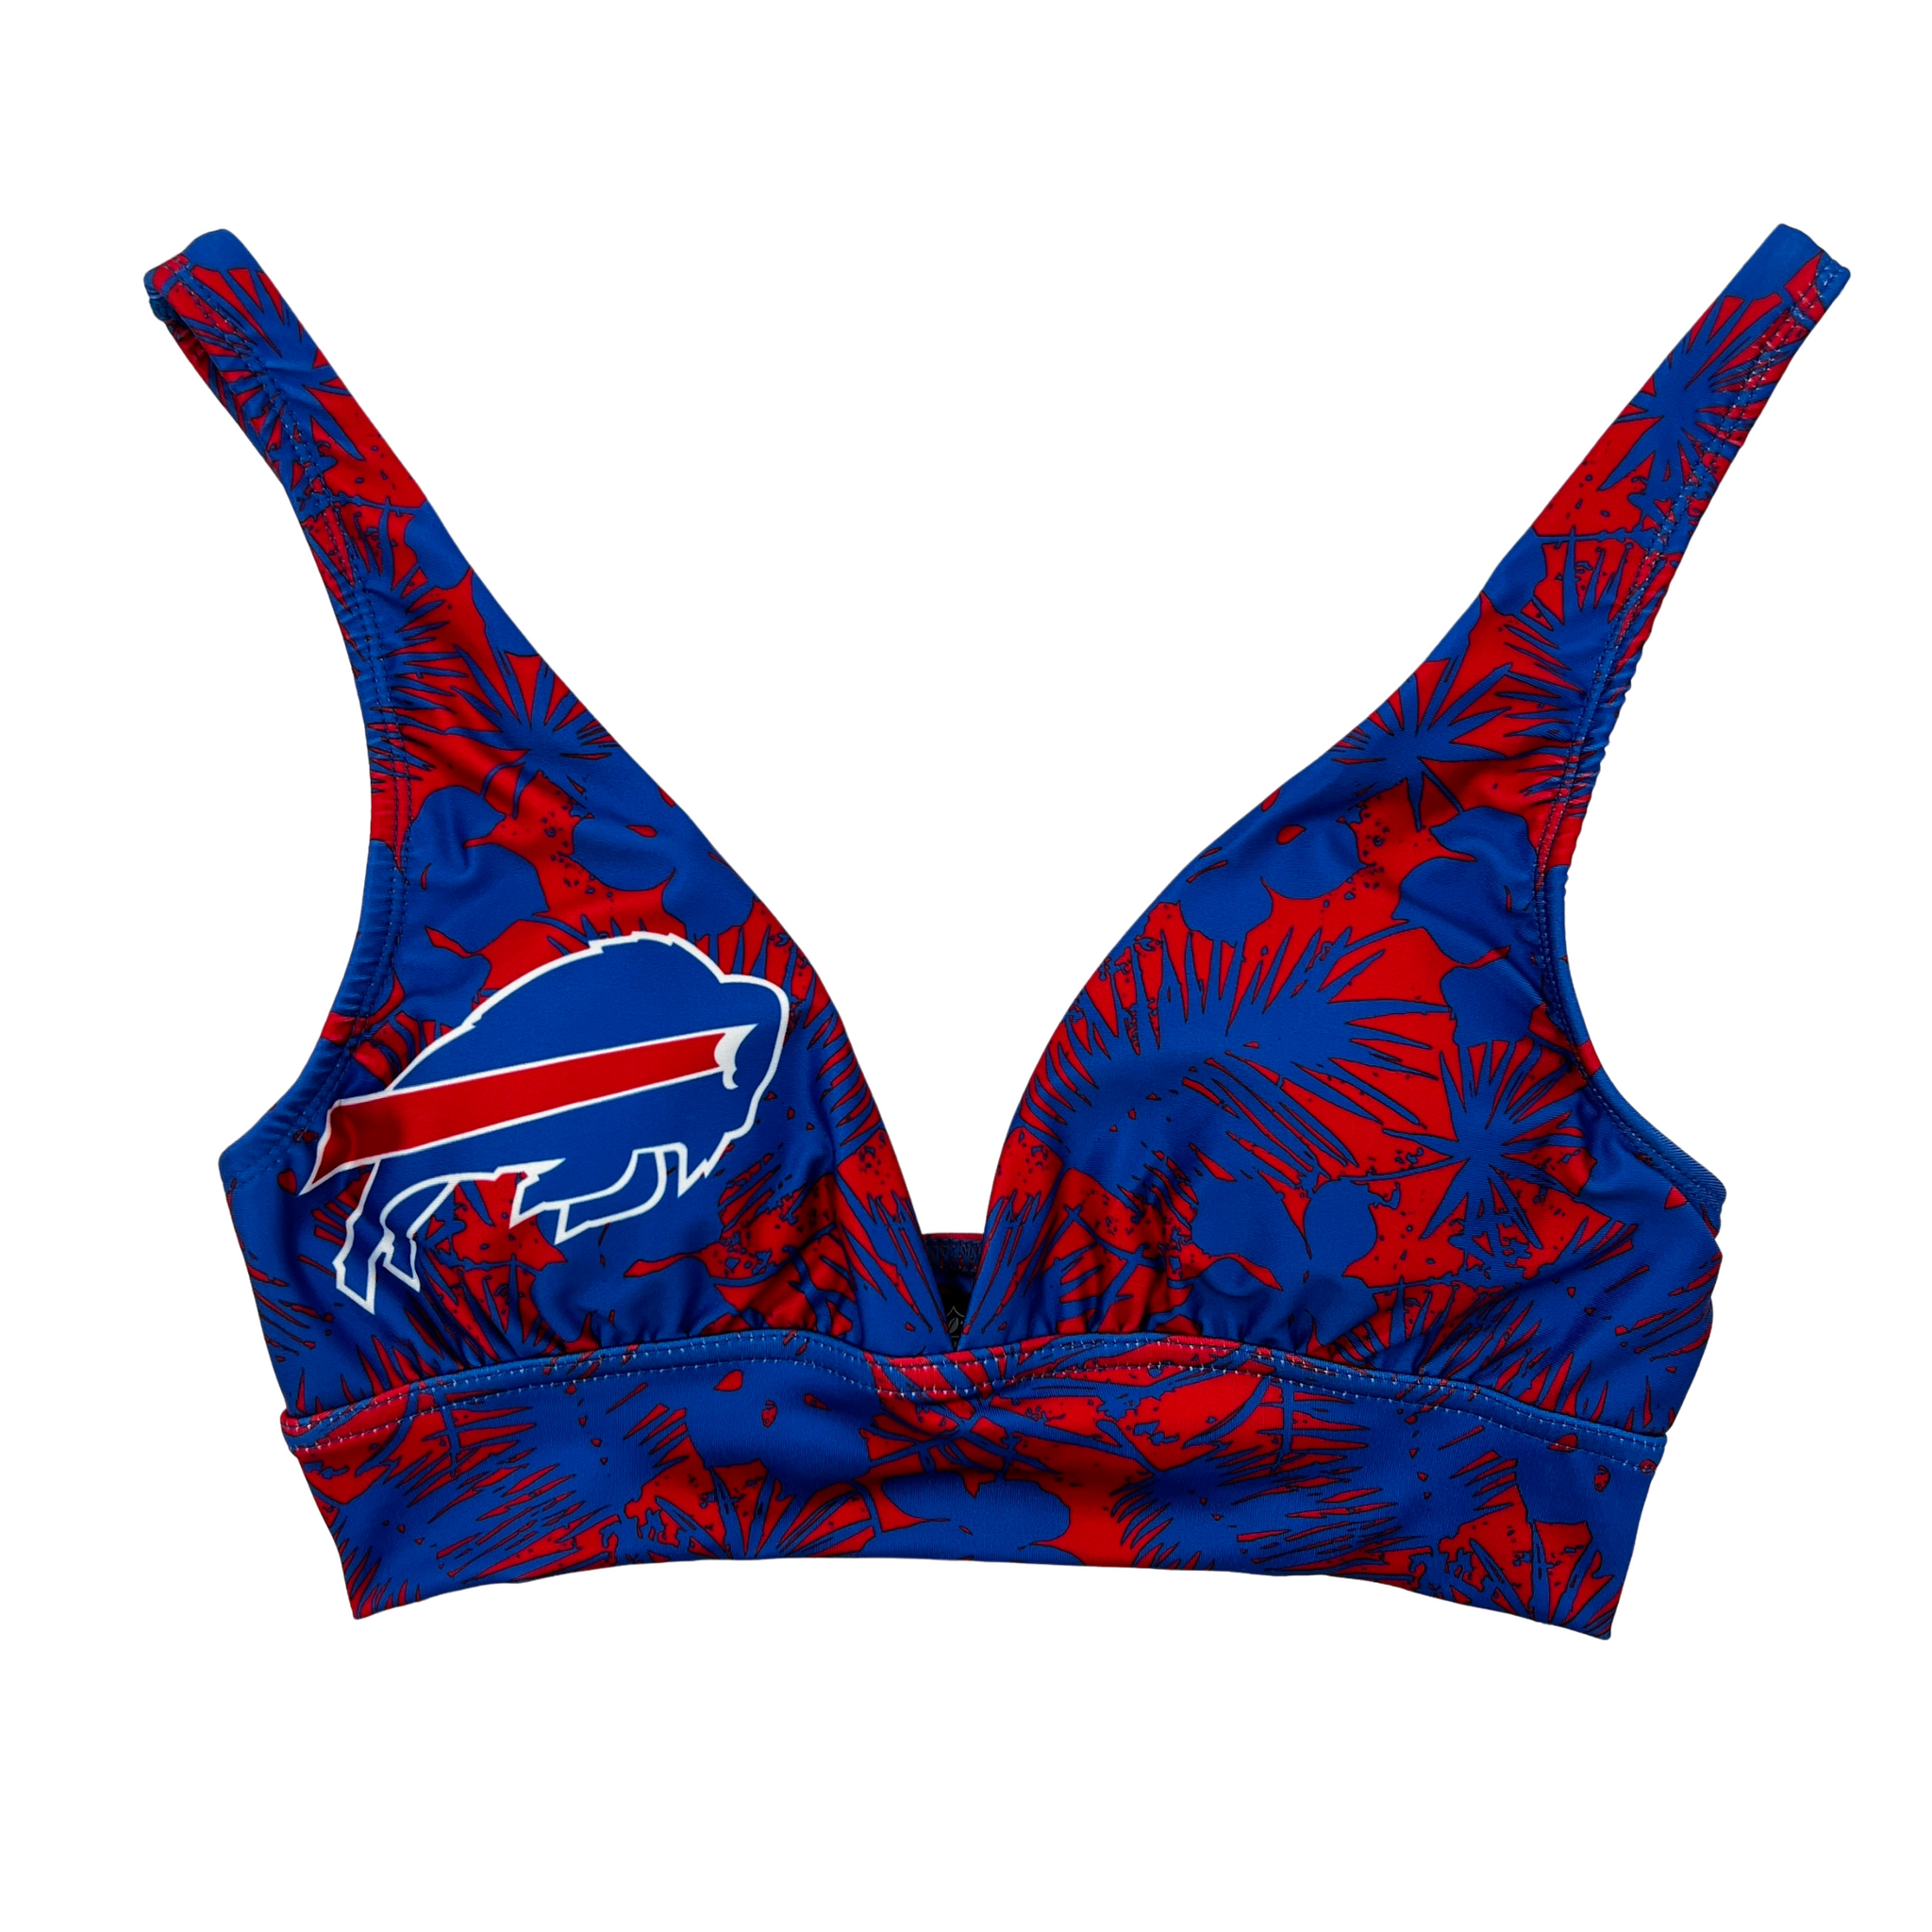 Women's Buffalo Bills Merchandise